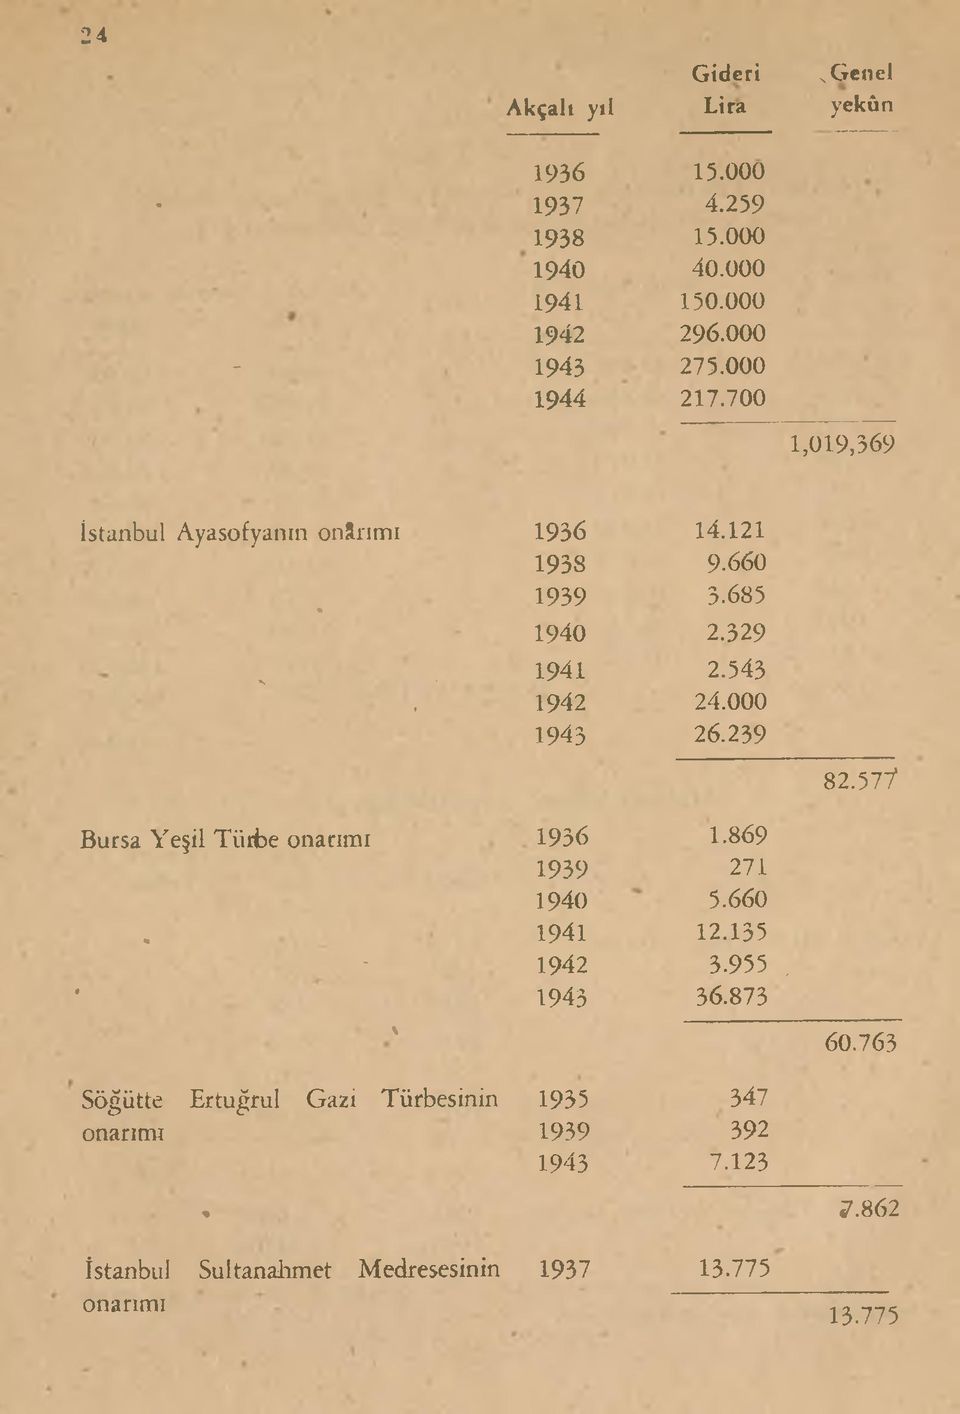 000 1943 26.239 Bursa Yeşil Türbe onarıraı 1936 1939 1.869 271 1940 5.660 * 1941 12.135 t - - 1942 3.955, 1943 36.